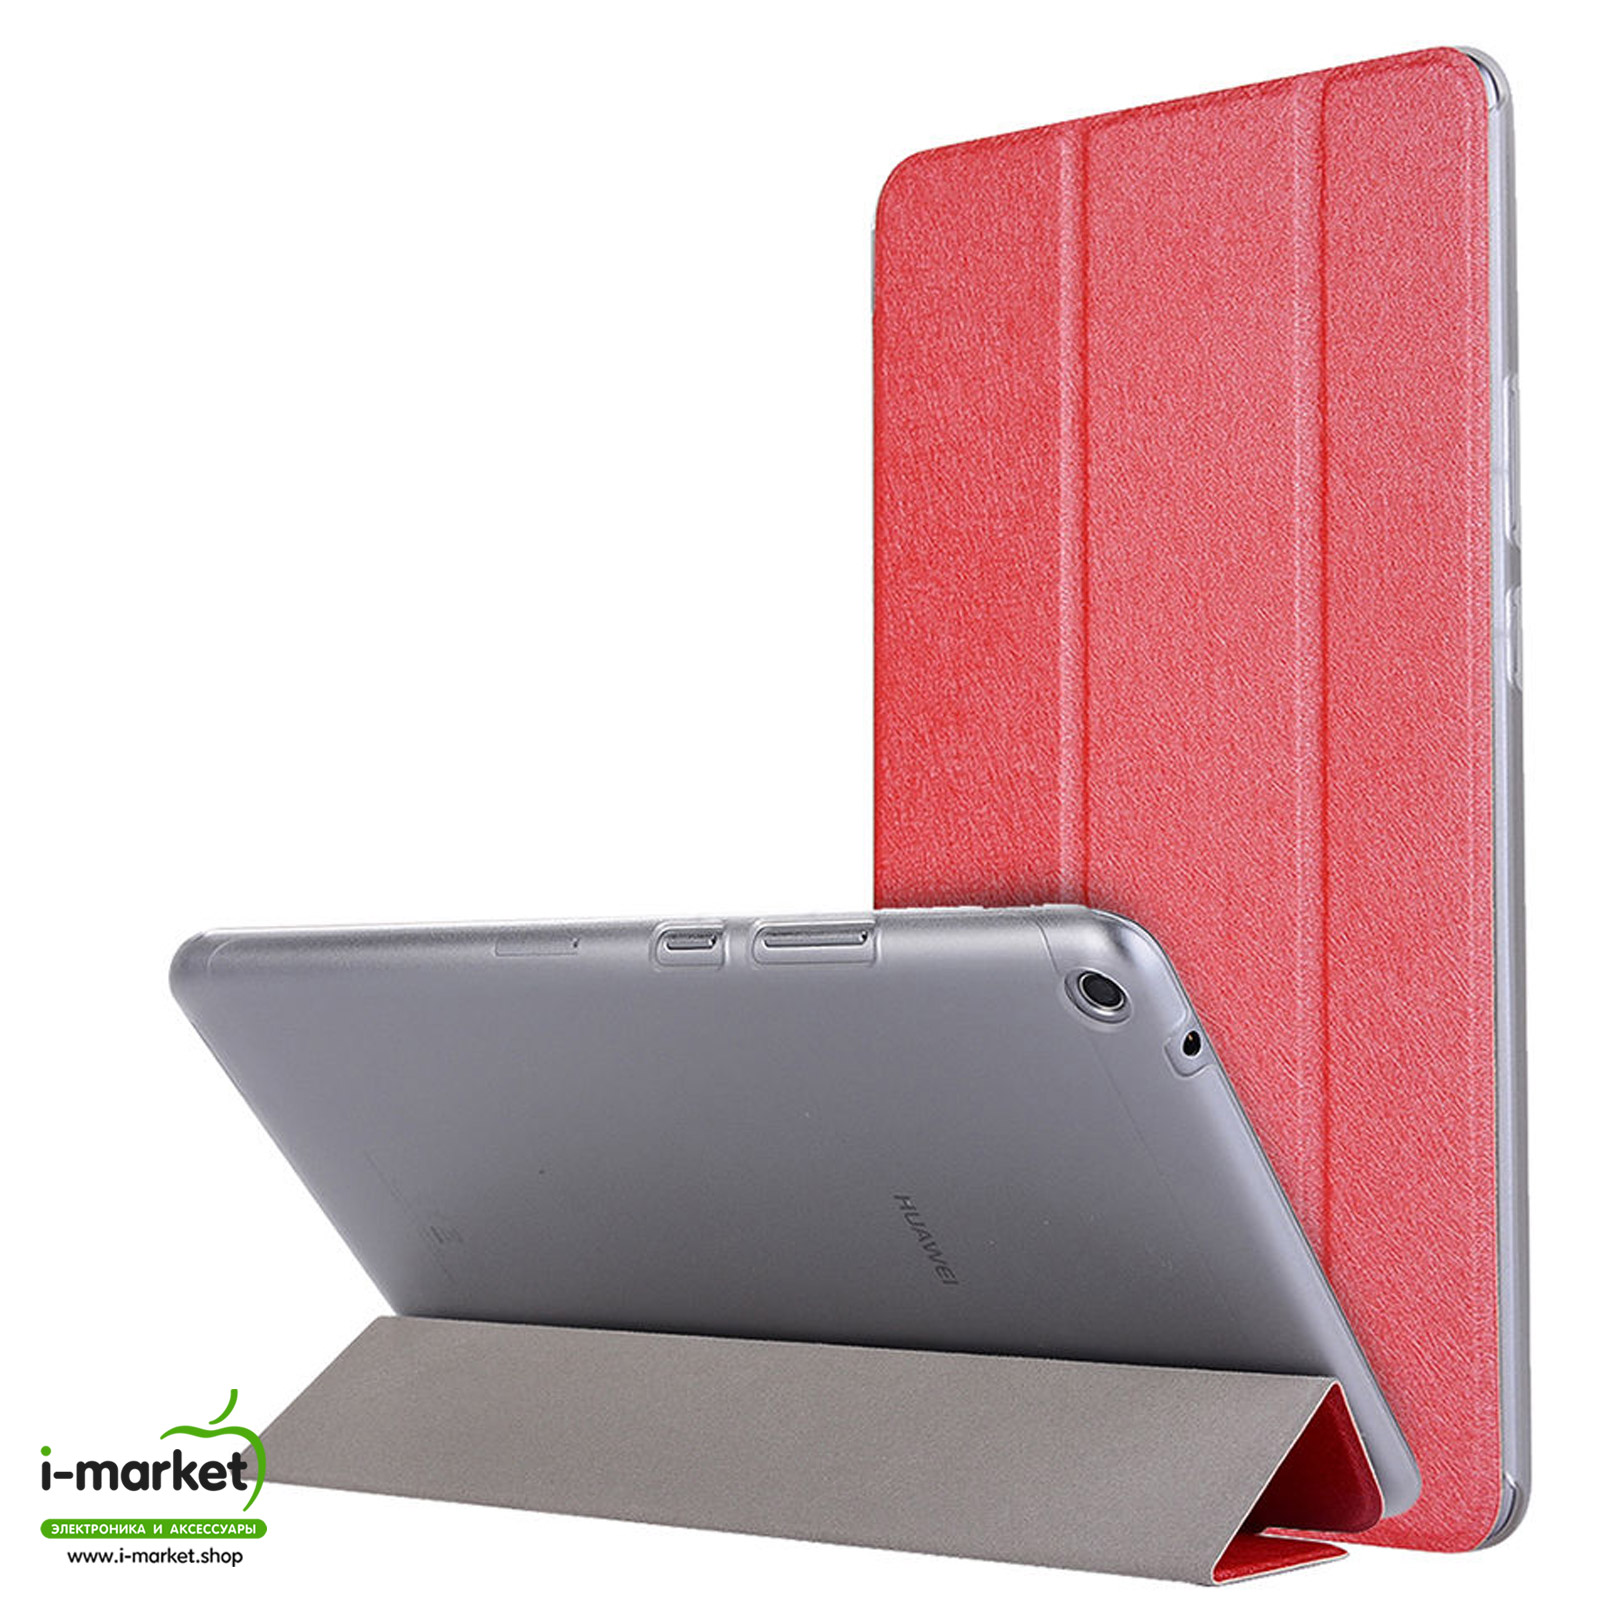 Чехол книжка Trans Cover для HUAWEI MediaPad T3 (KOB-L09, KOB-W09), диагональ 8.0", цвет красный